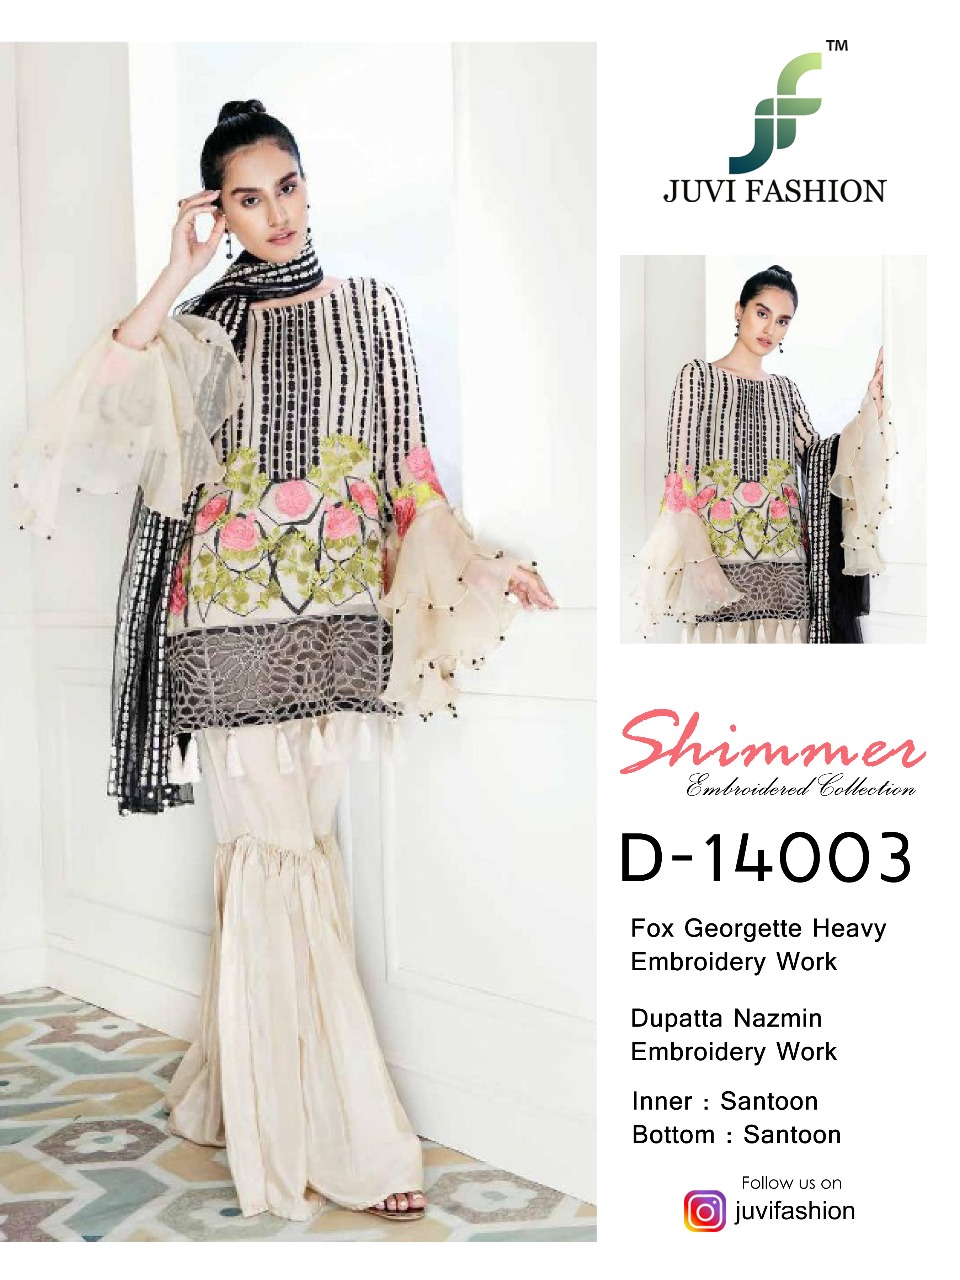 JUVI fashion presents SHIMMER beautiful embroidery work pakistani concept salwar kameez